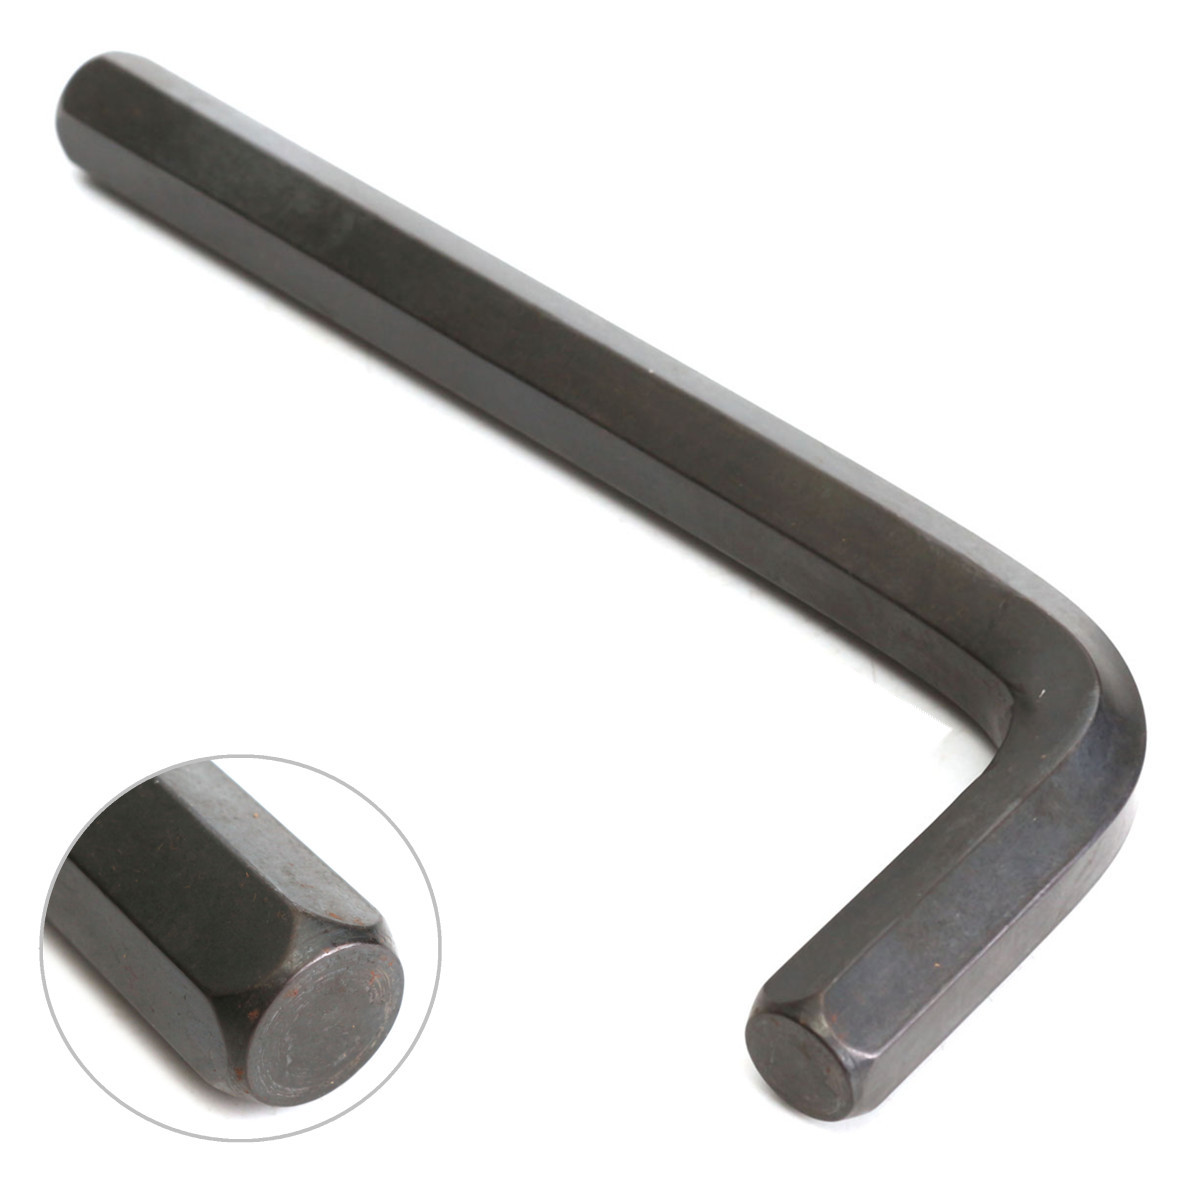 

12mm Steel L Shaped Metric Hexagon Key Hex Allen Wrench Spanner Stick Tool Black